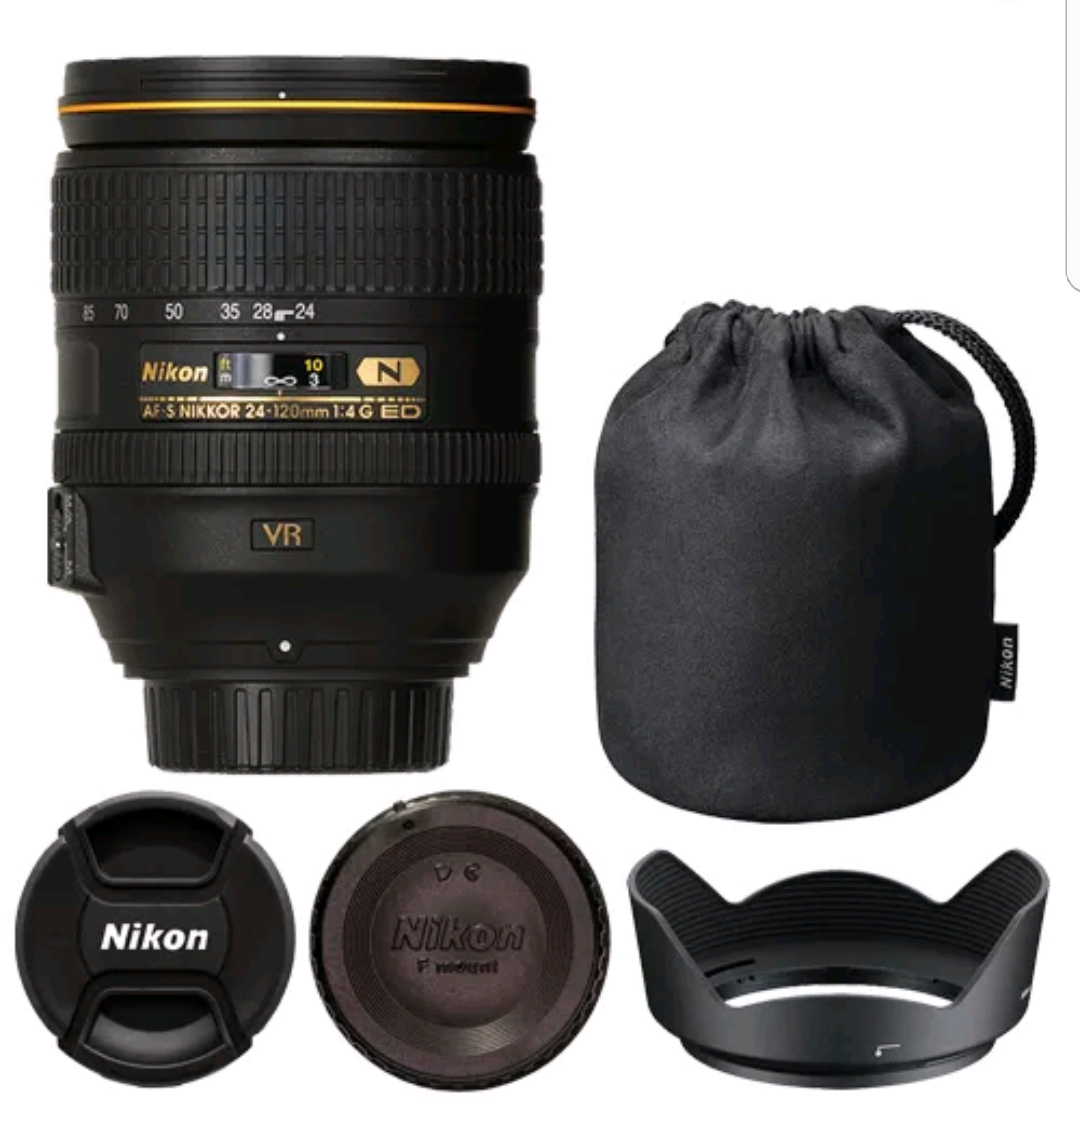 Nikon 24 120mm vr. Nikon 24-120mm f/4g. Объектив Nikon 24-120mm f/4g ed VR af-s Nikkor. Nikon 24-120mm f/4.